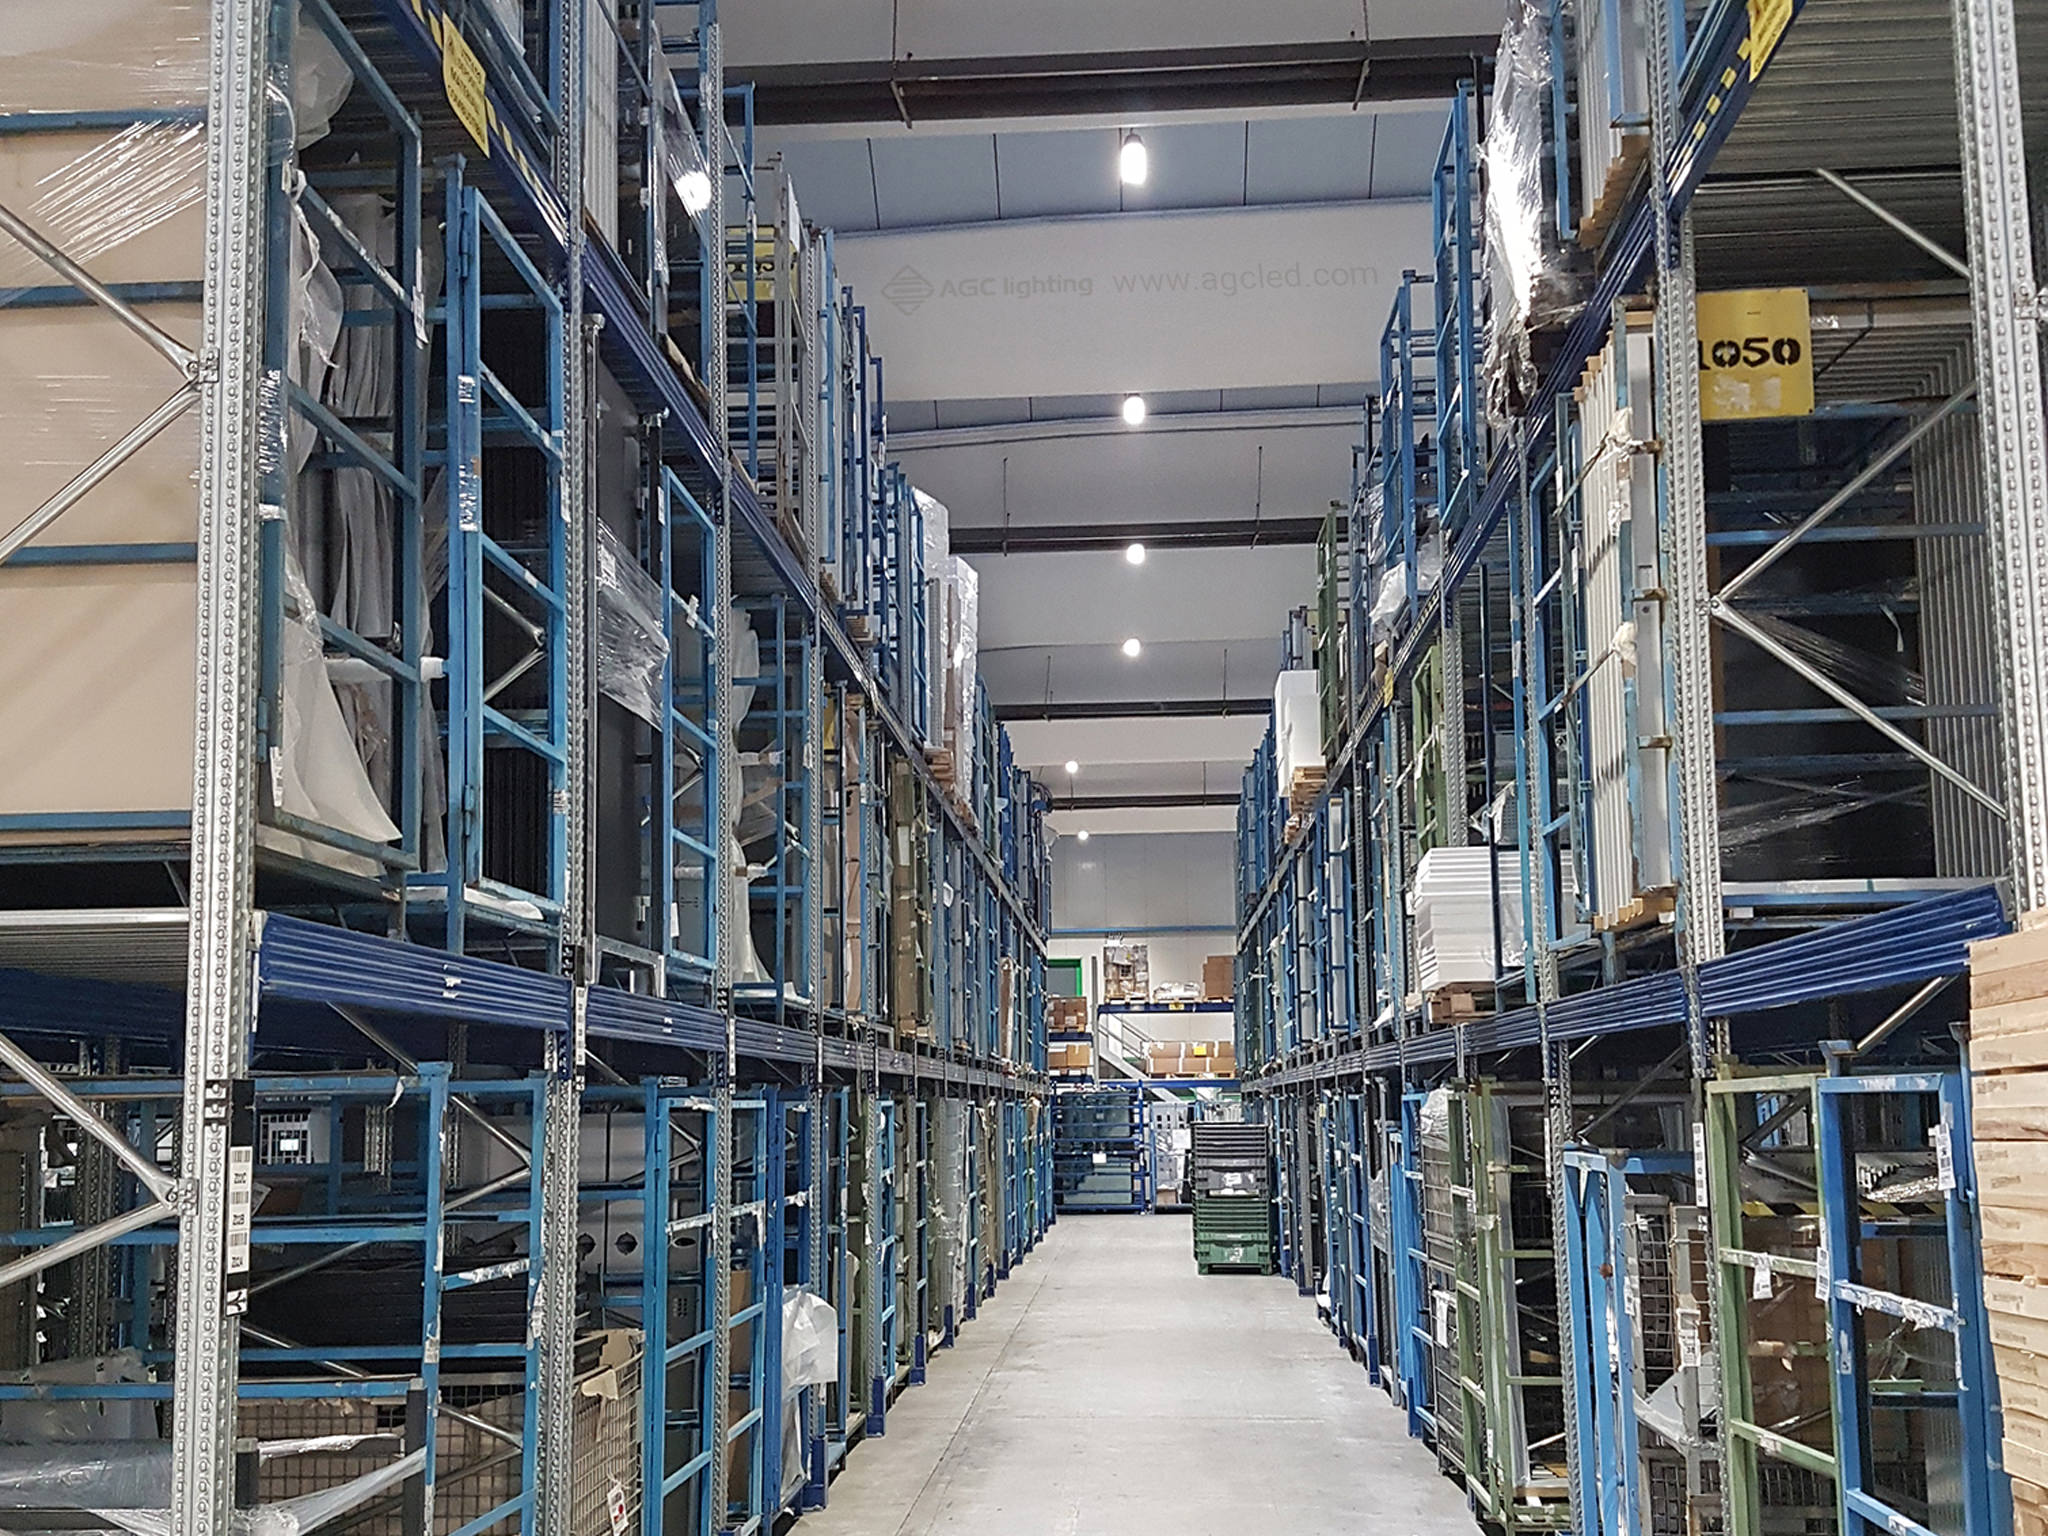 60w linear high bay light for warehouse aisles